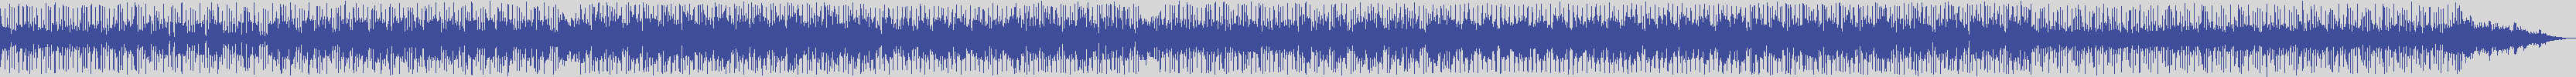 noclouds_chillout [NOC004] Alberto Moggi - Vale [Original Mix] audio wave form